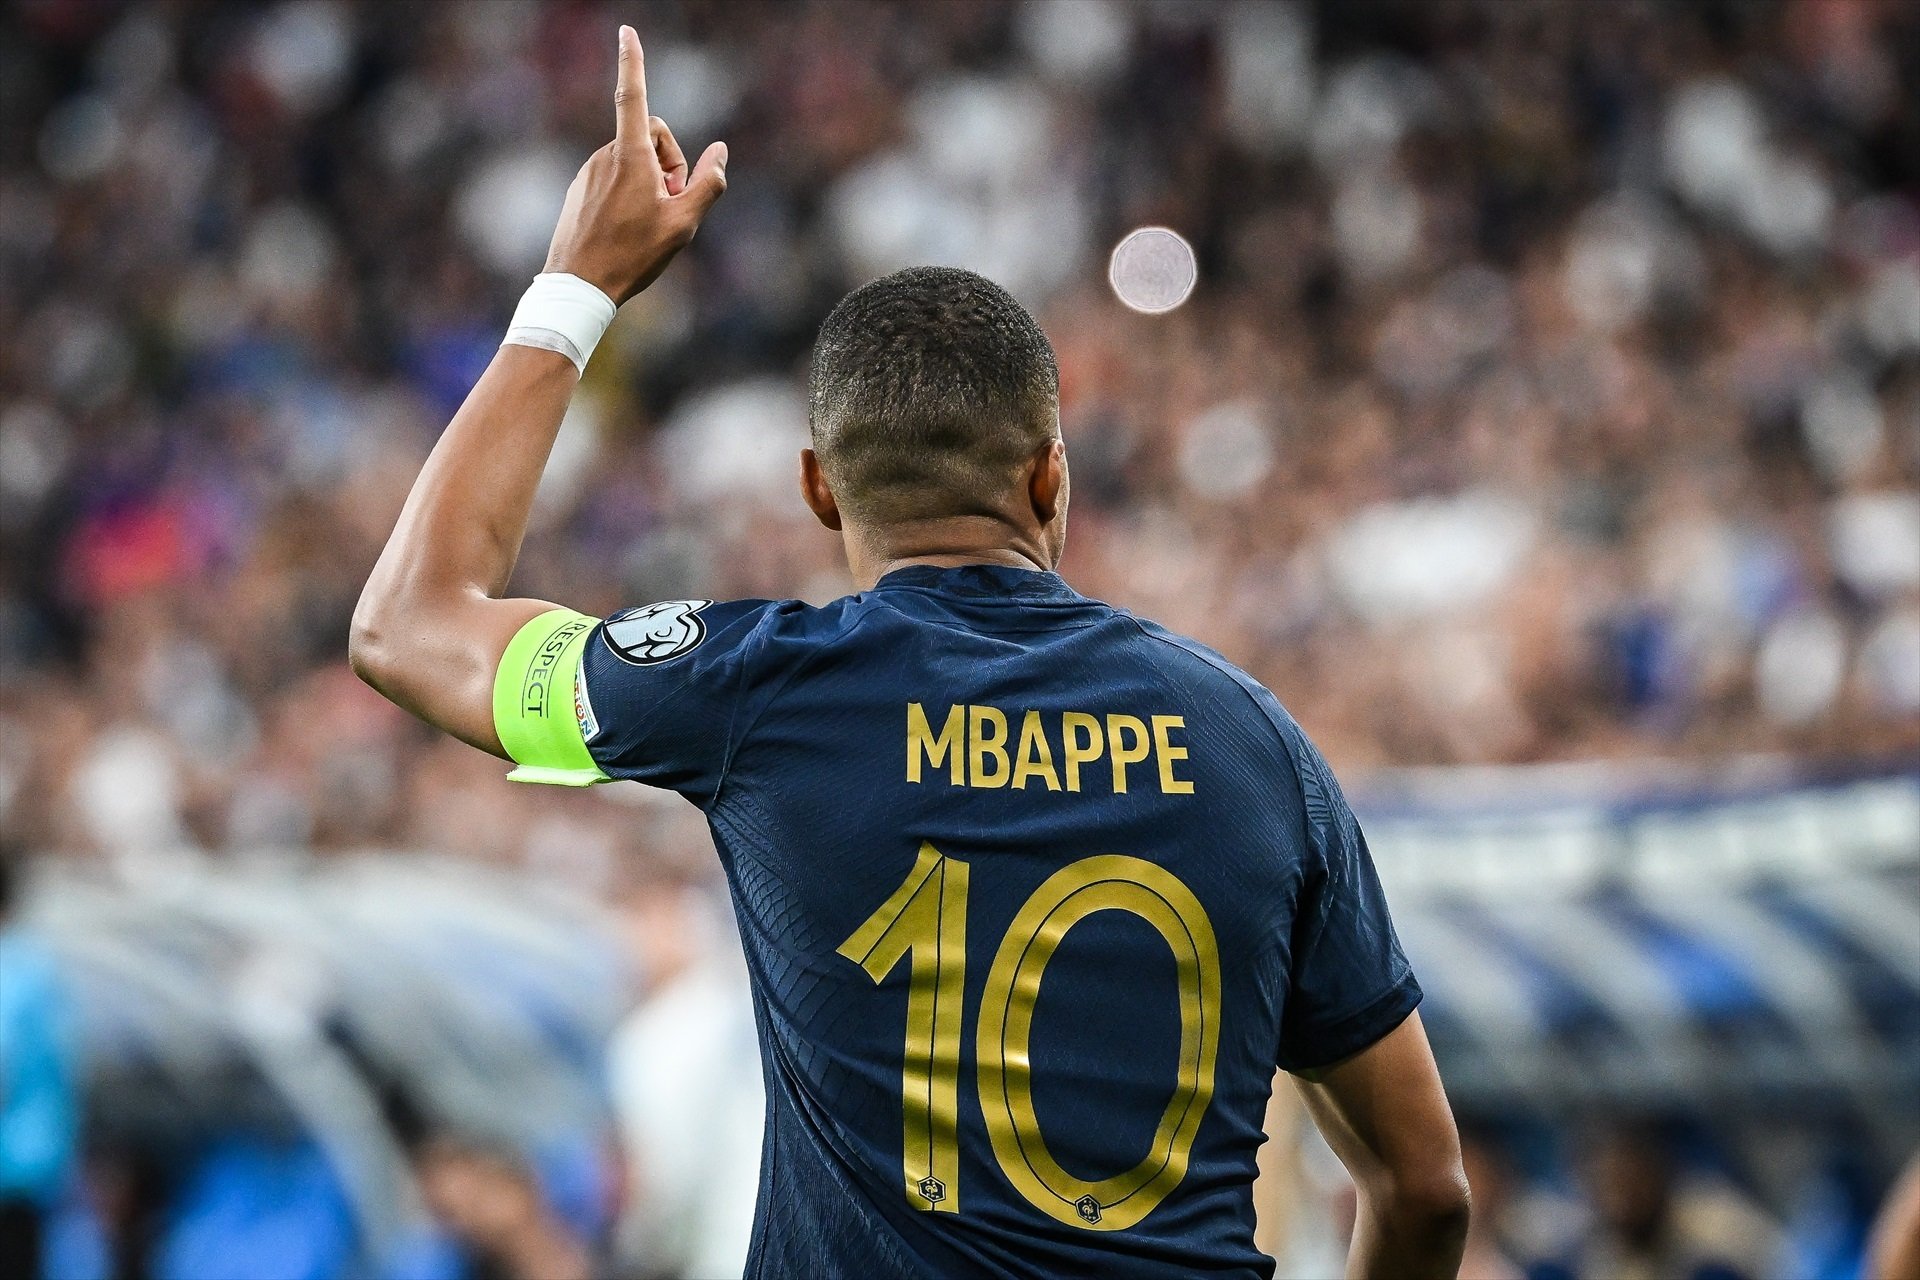 300 millones para los 2 fichajes que sustituirán a Mbappé en el Real Madrid, el plan